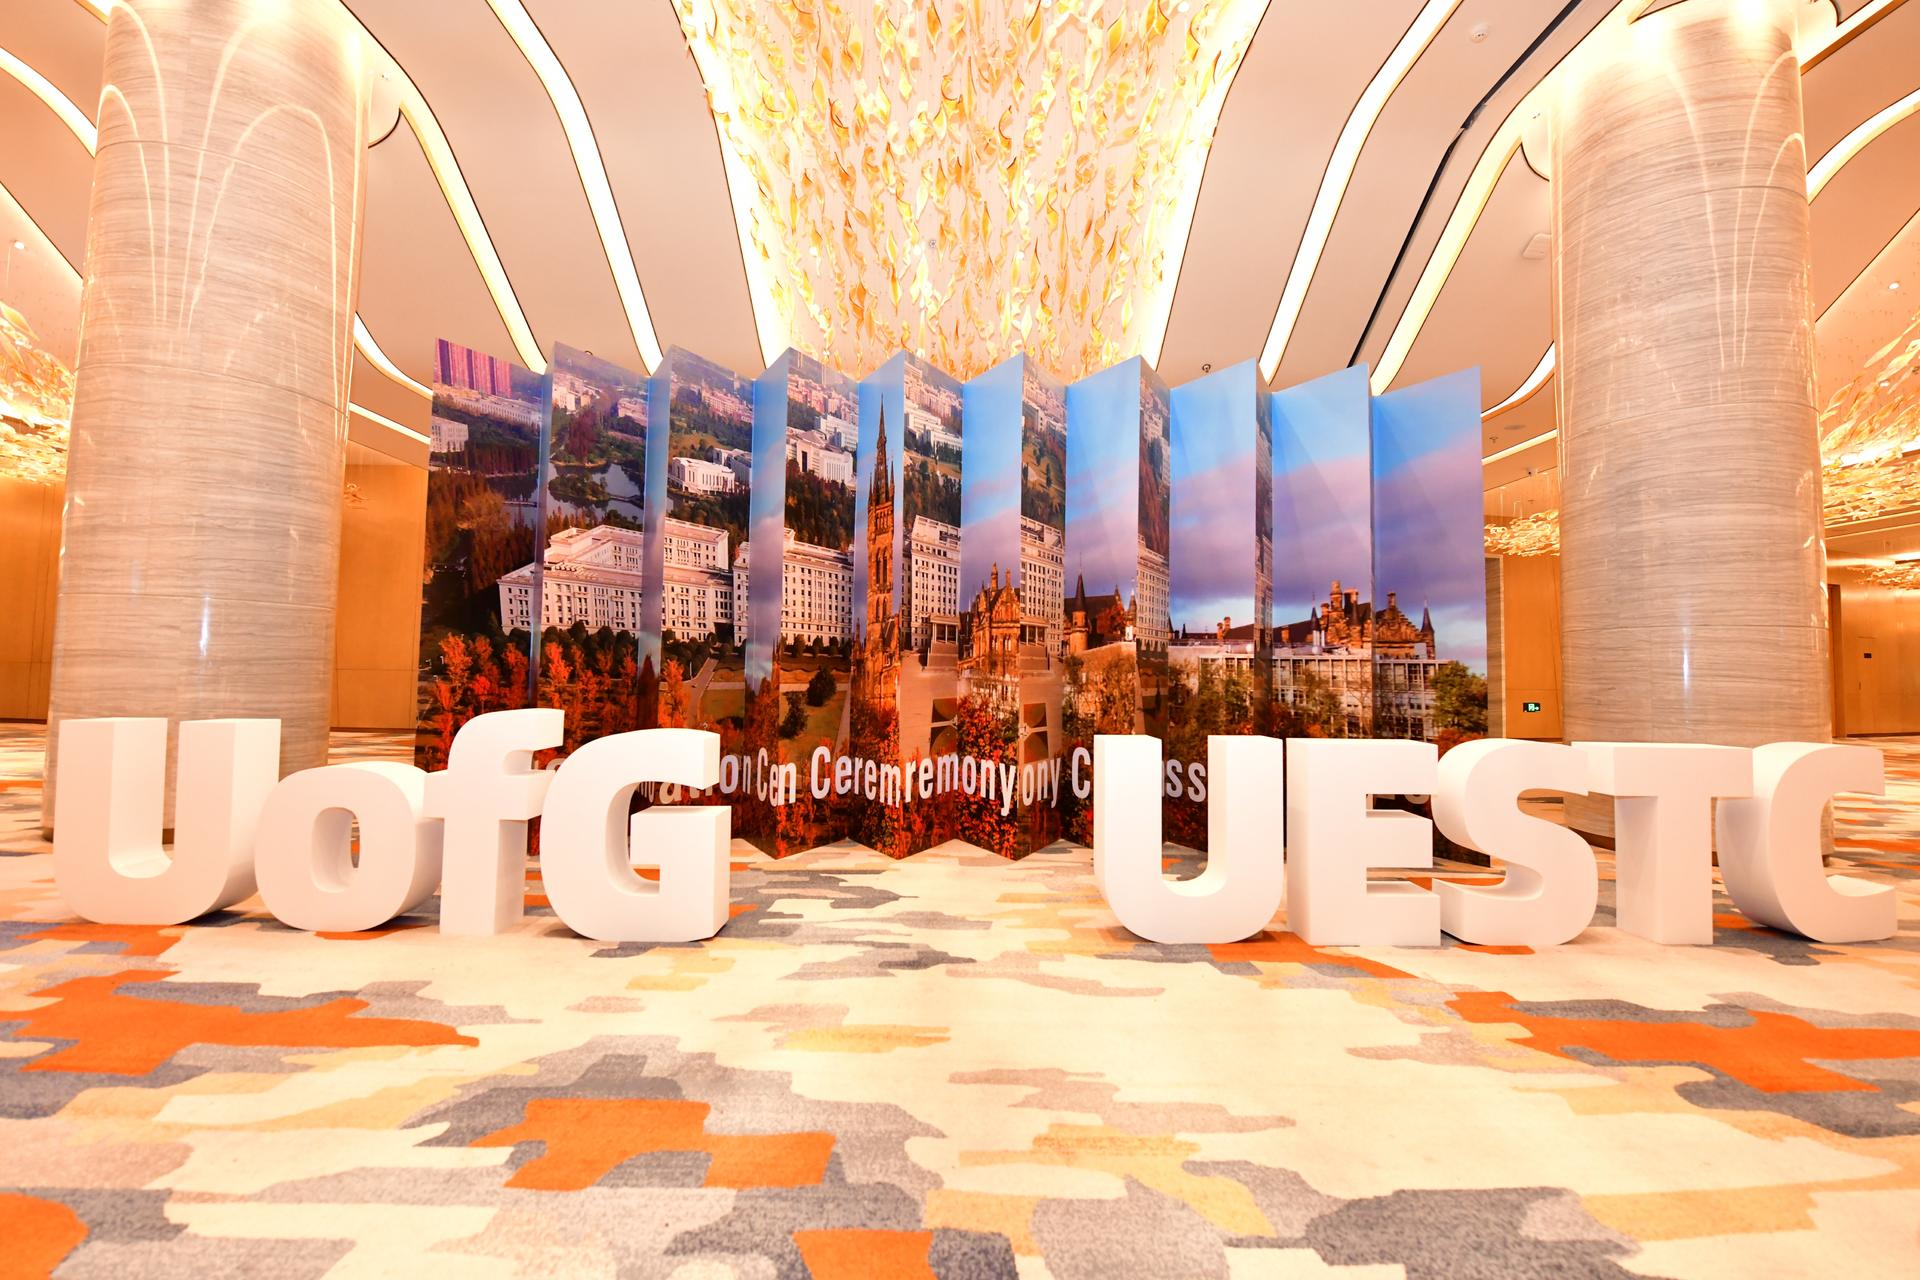 UoG and UESTC decorations in Tivoli hotel ballroom lobby